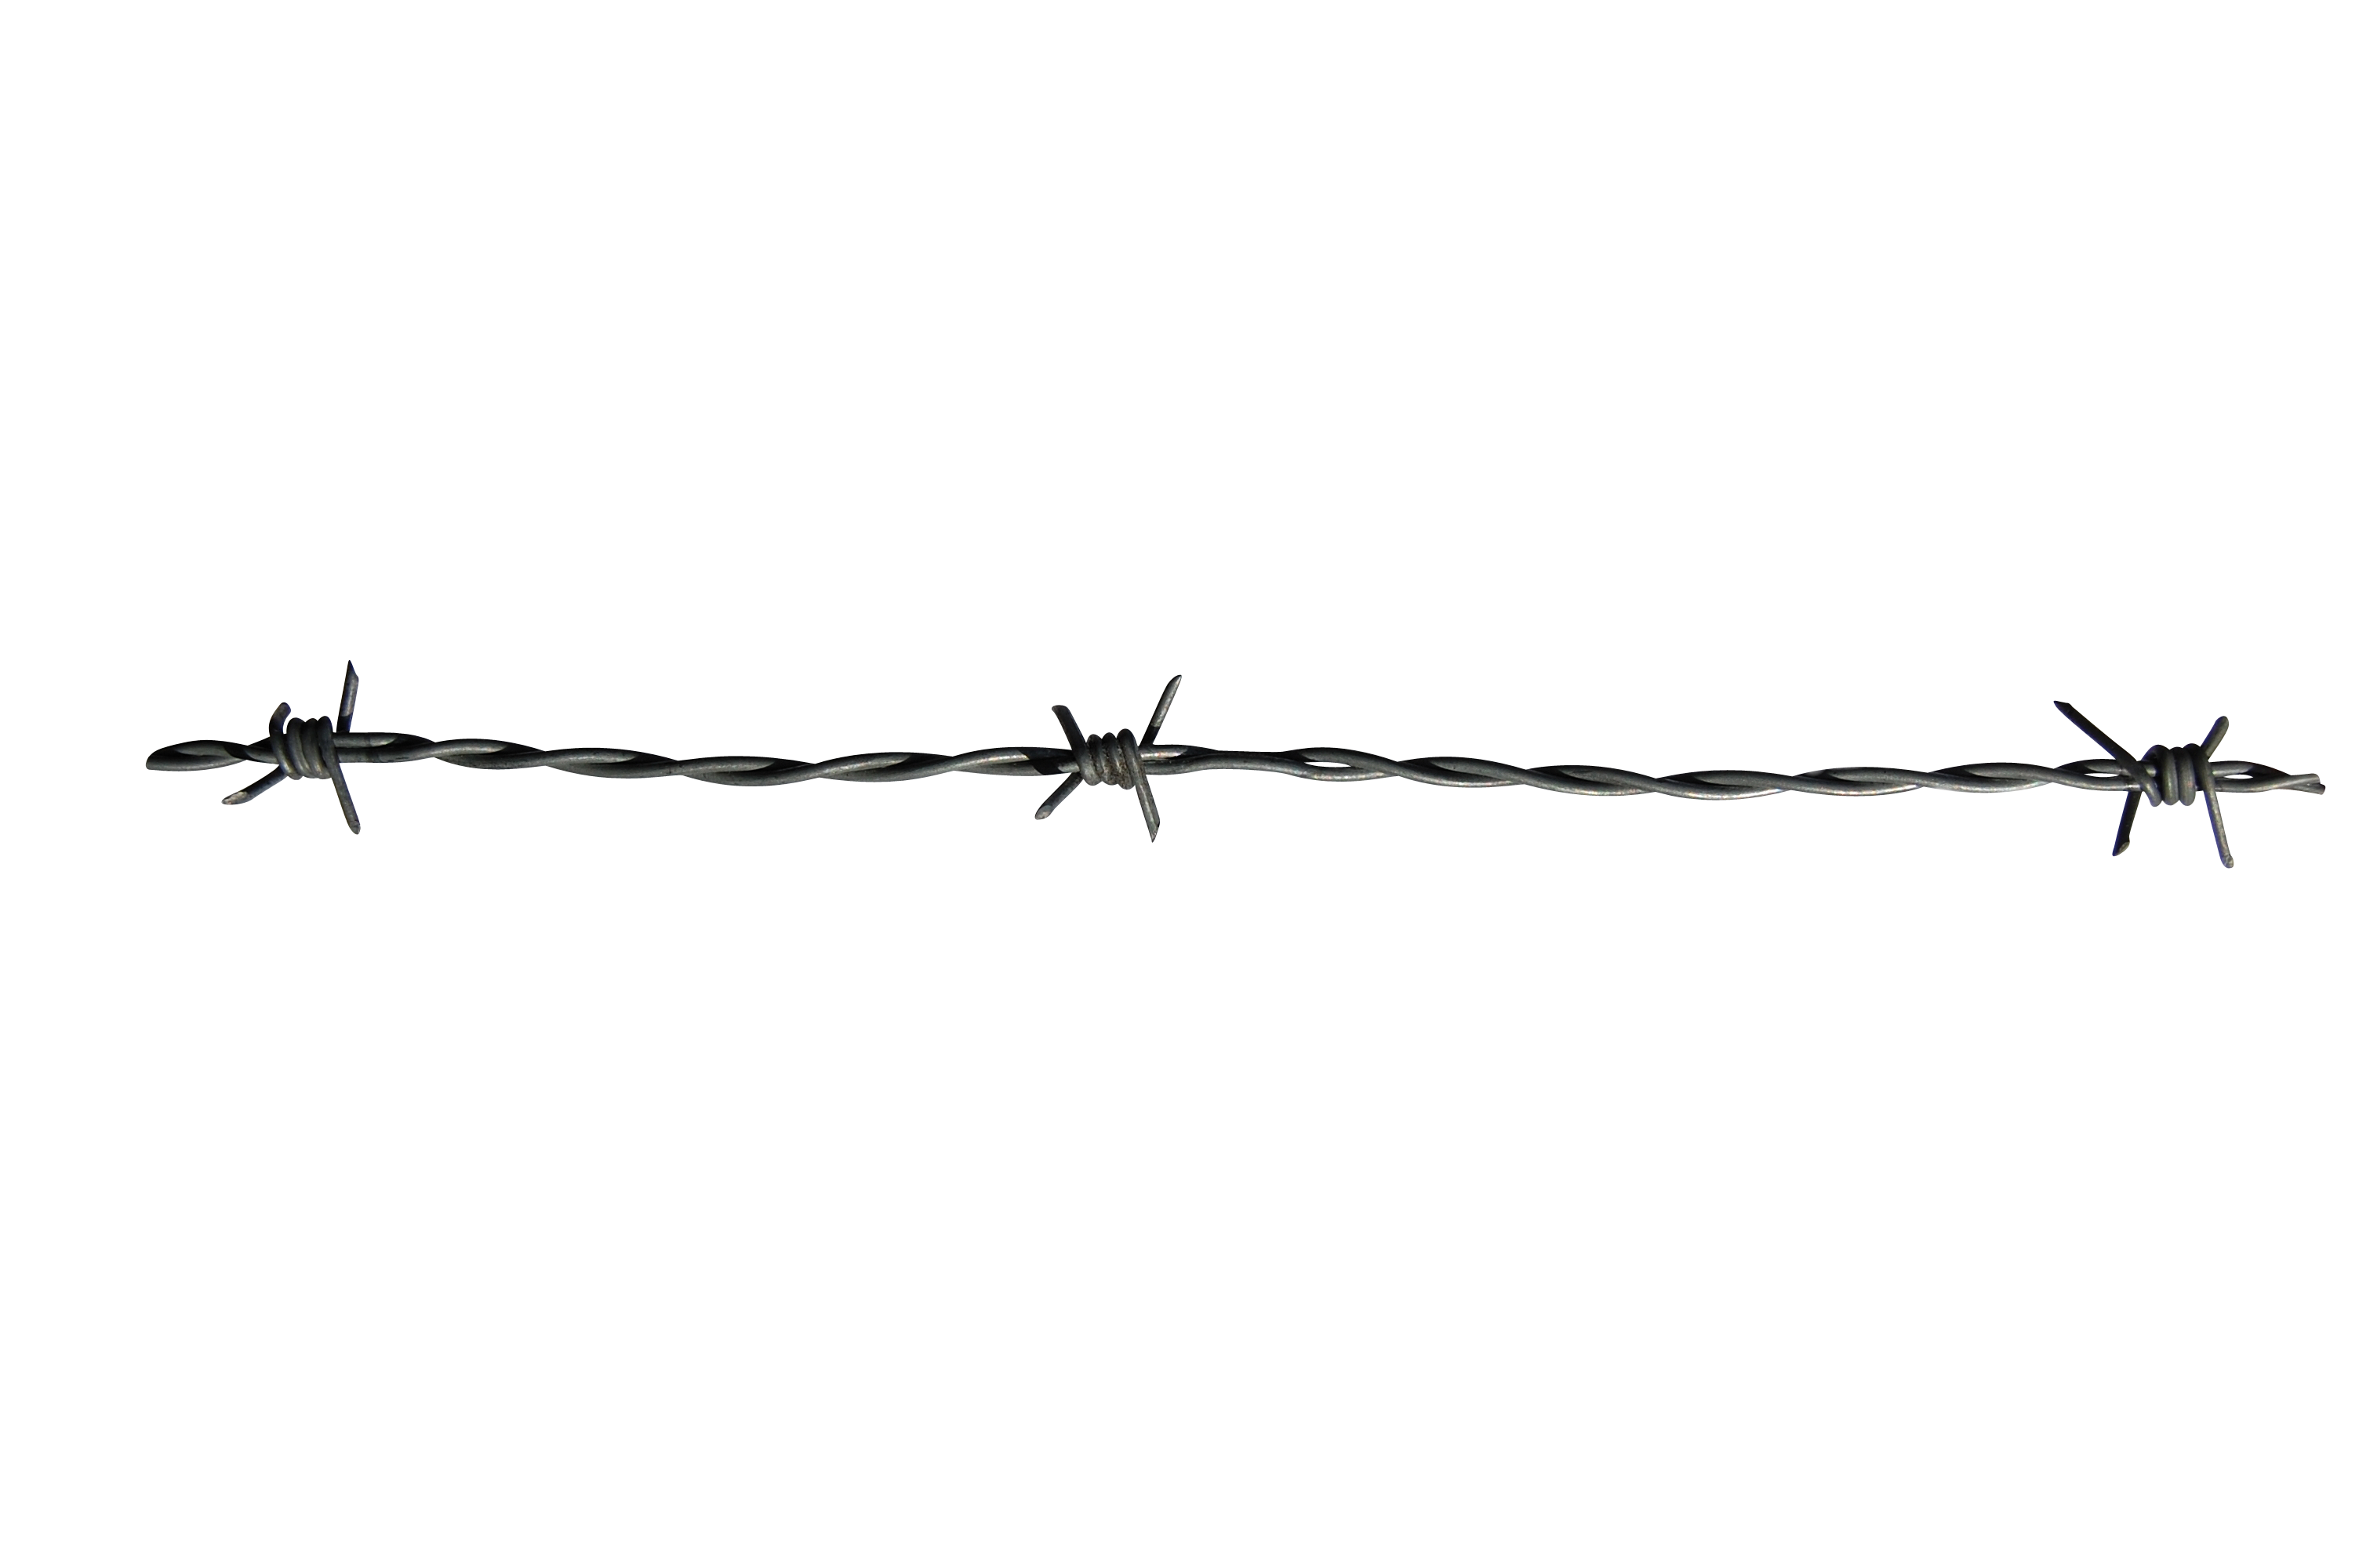 Free Barbed Wire Clip Art - C